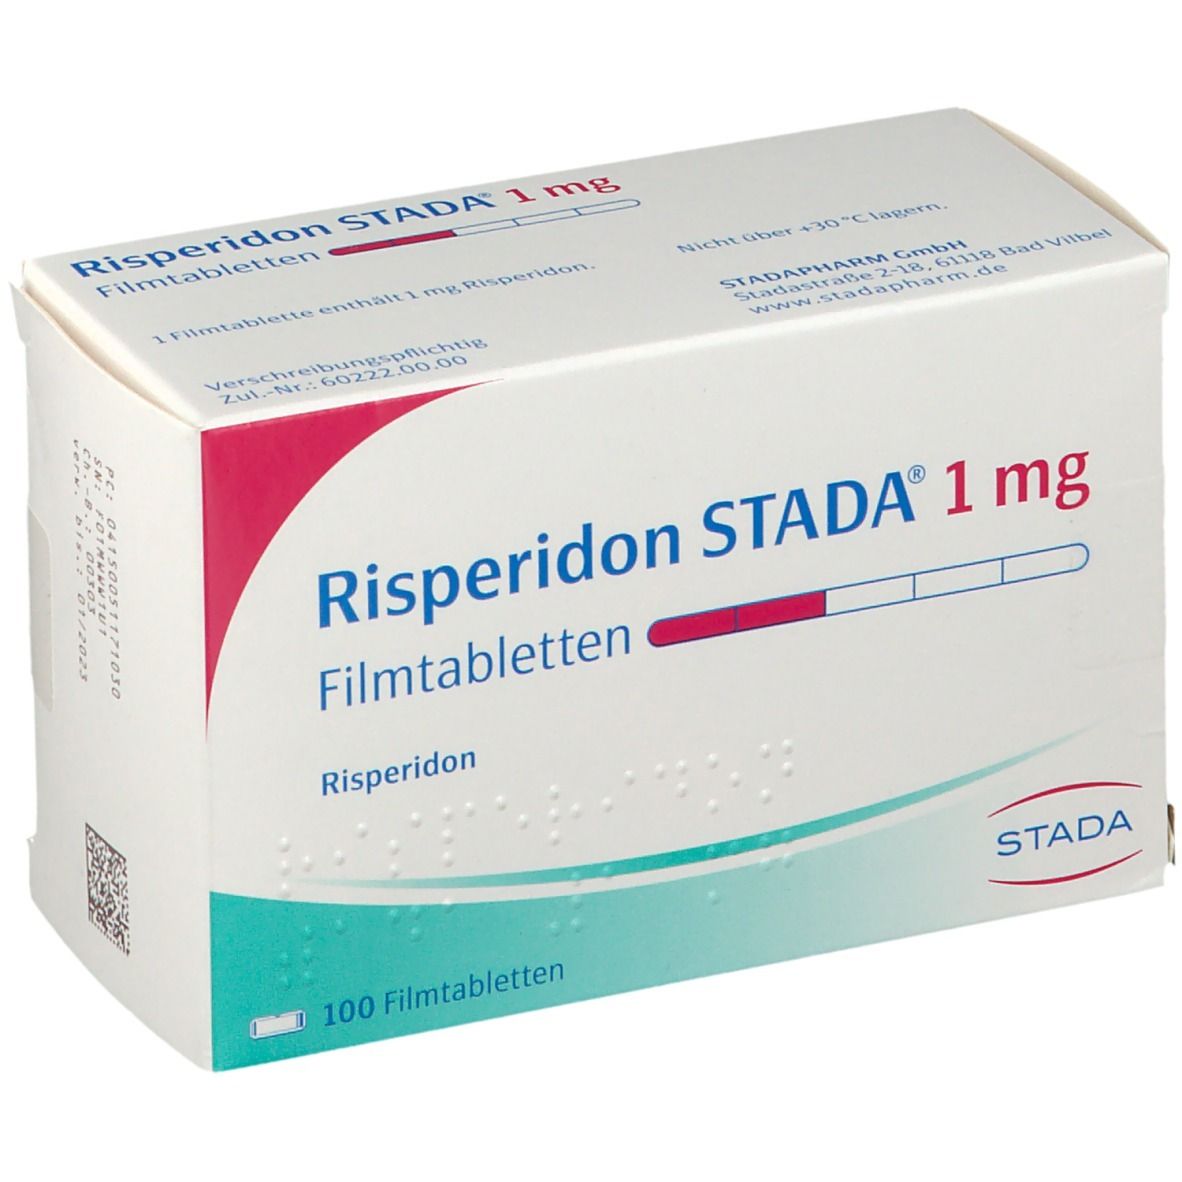 Risperidon STADA® 1 mg